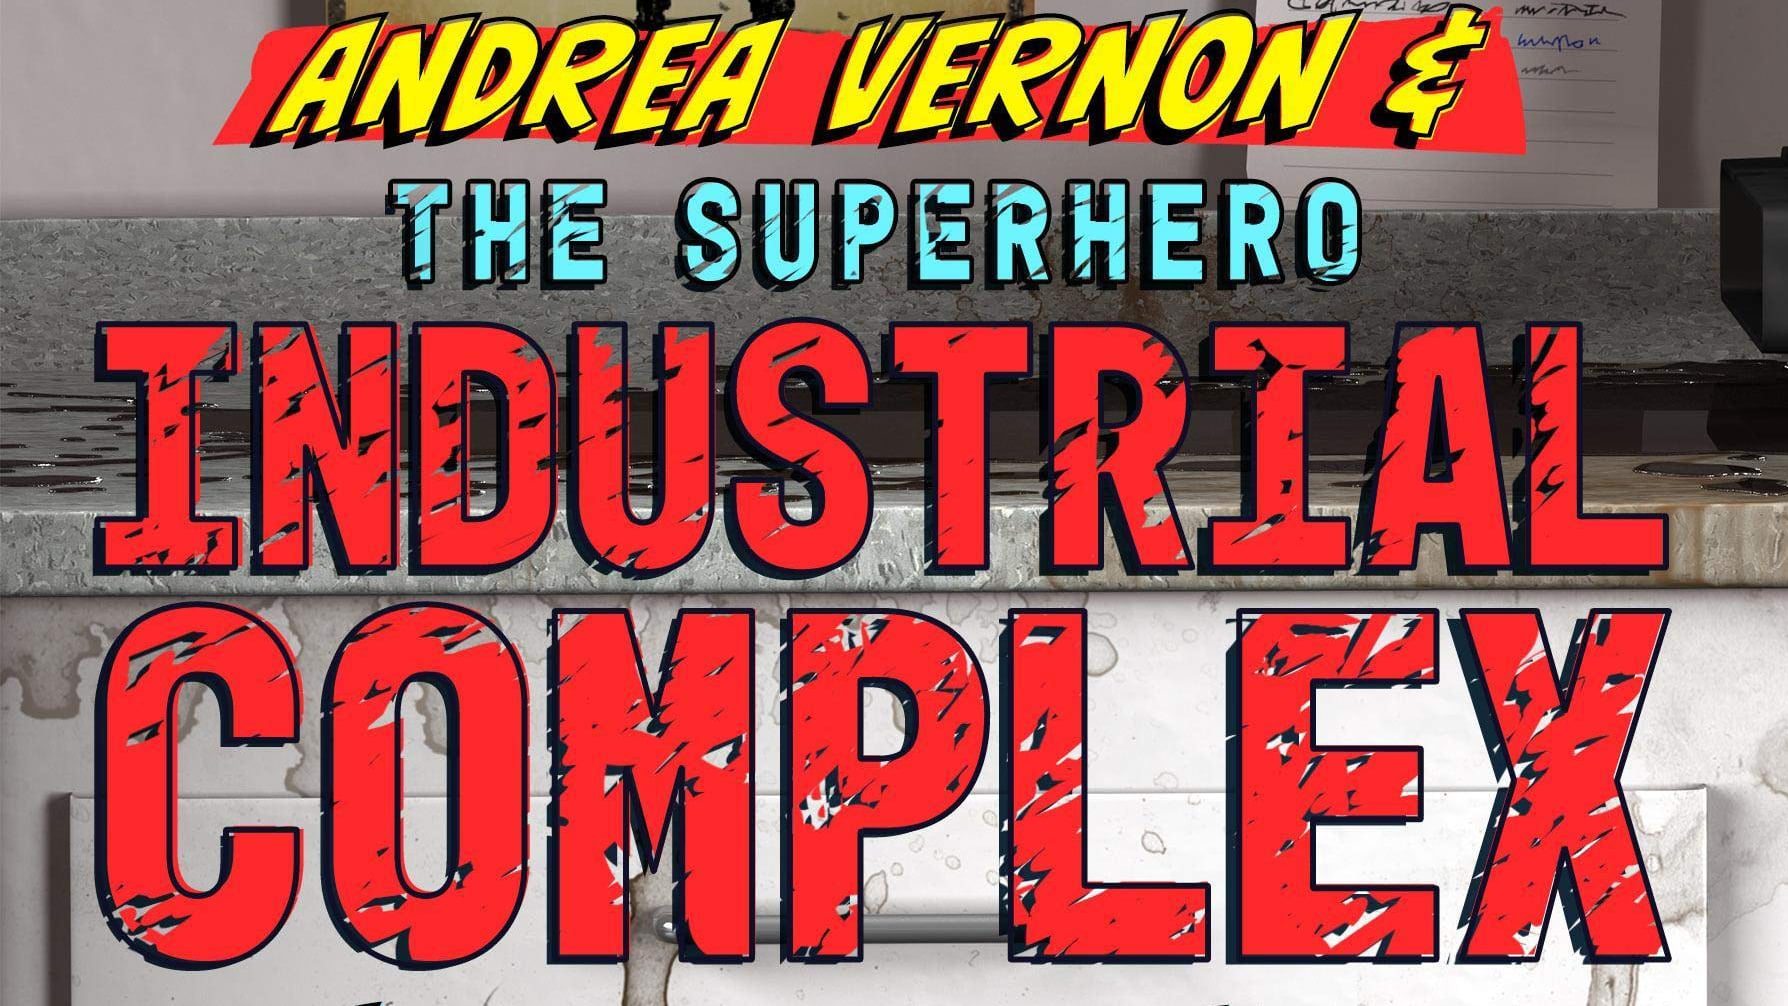 Andrea Vernon and the Superhero-Industrial Complex